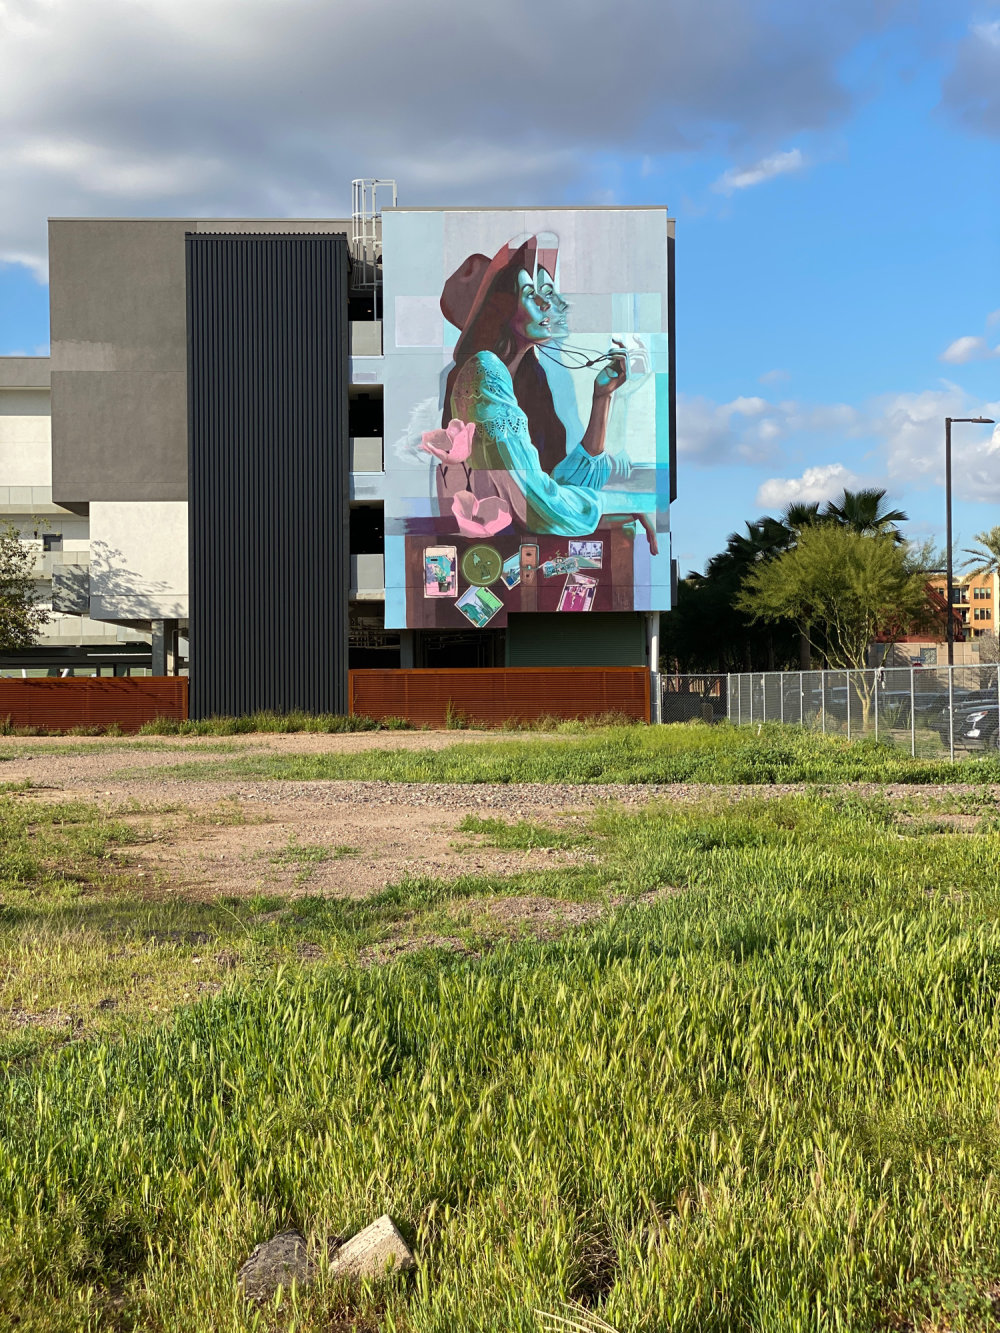 mural in Phoenix by artist Clyde.